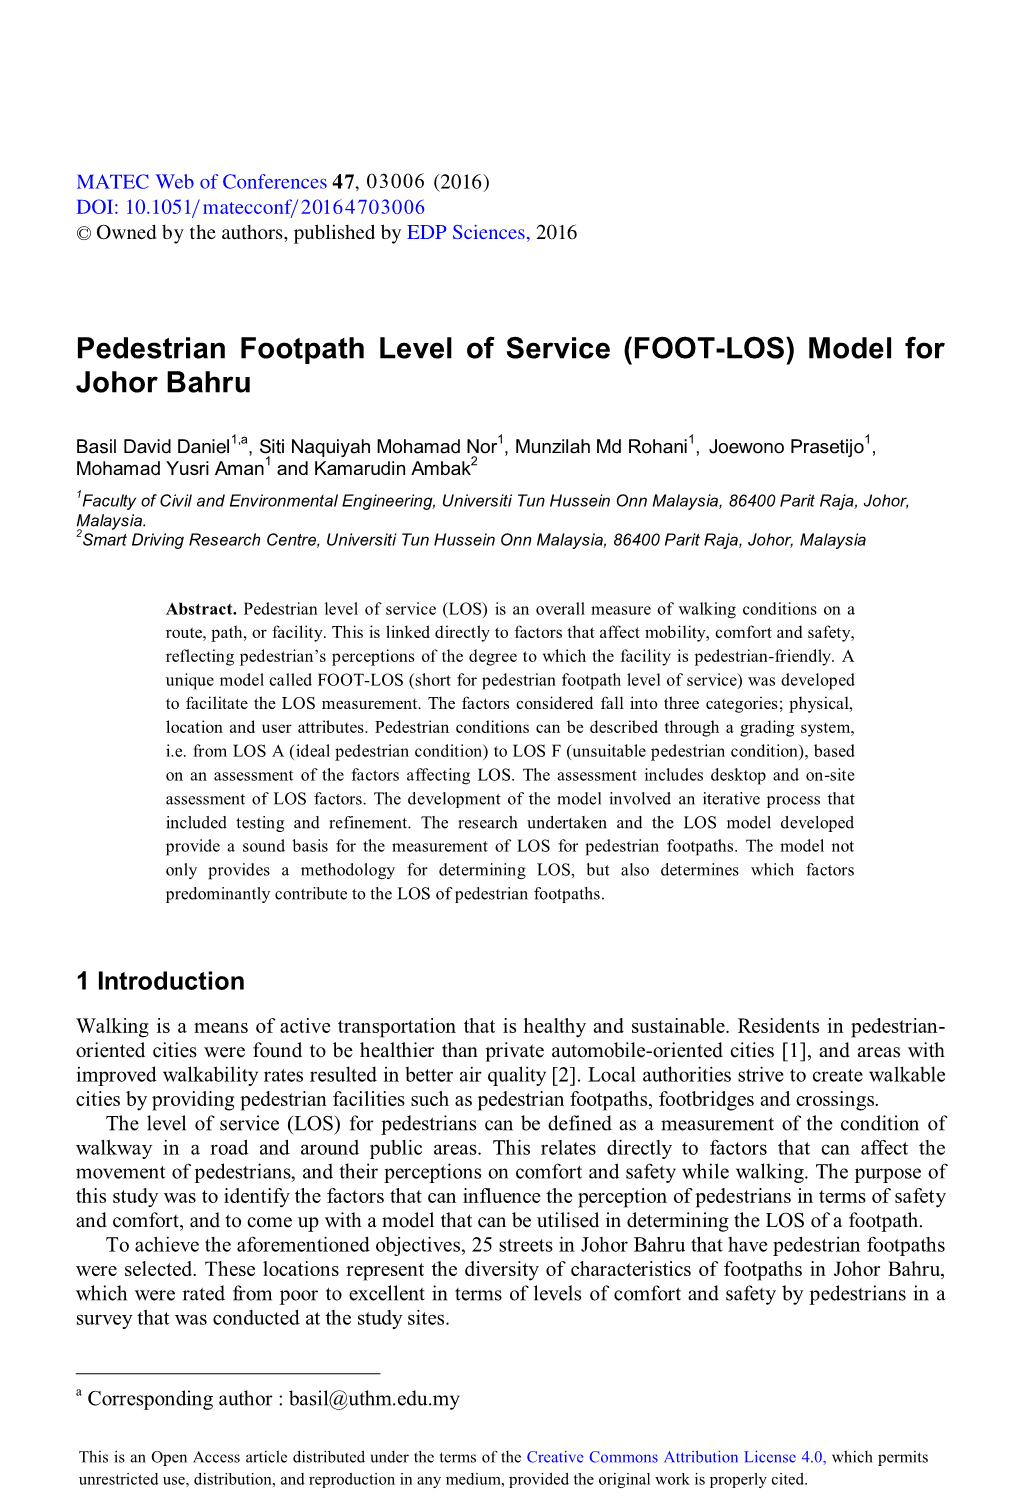 Pedestrian Footpath Level of Service (FOOT-LOS) Model for Johor Bahru